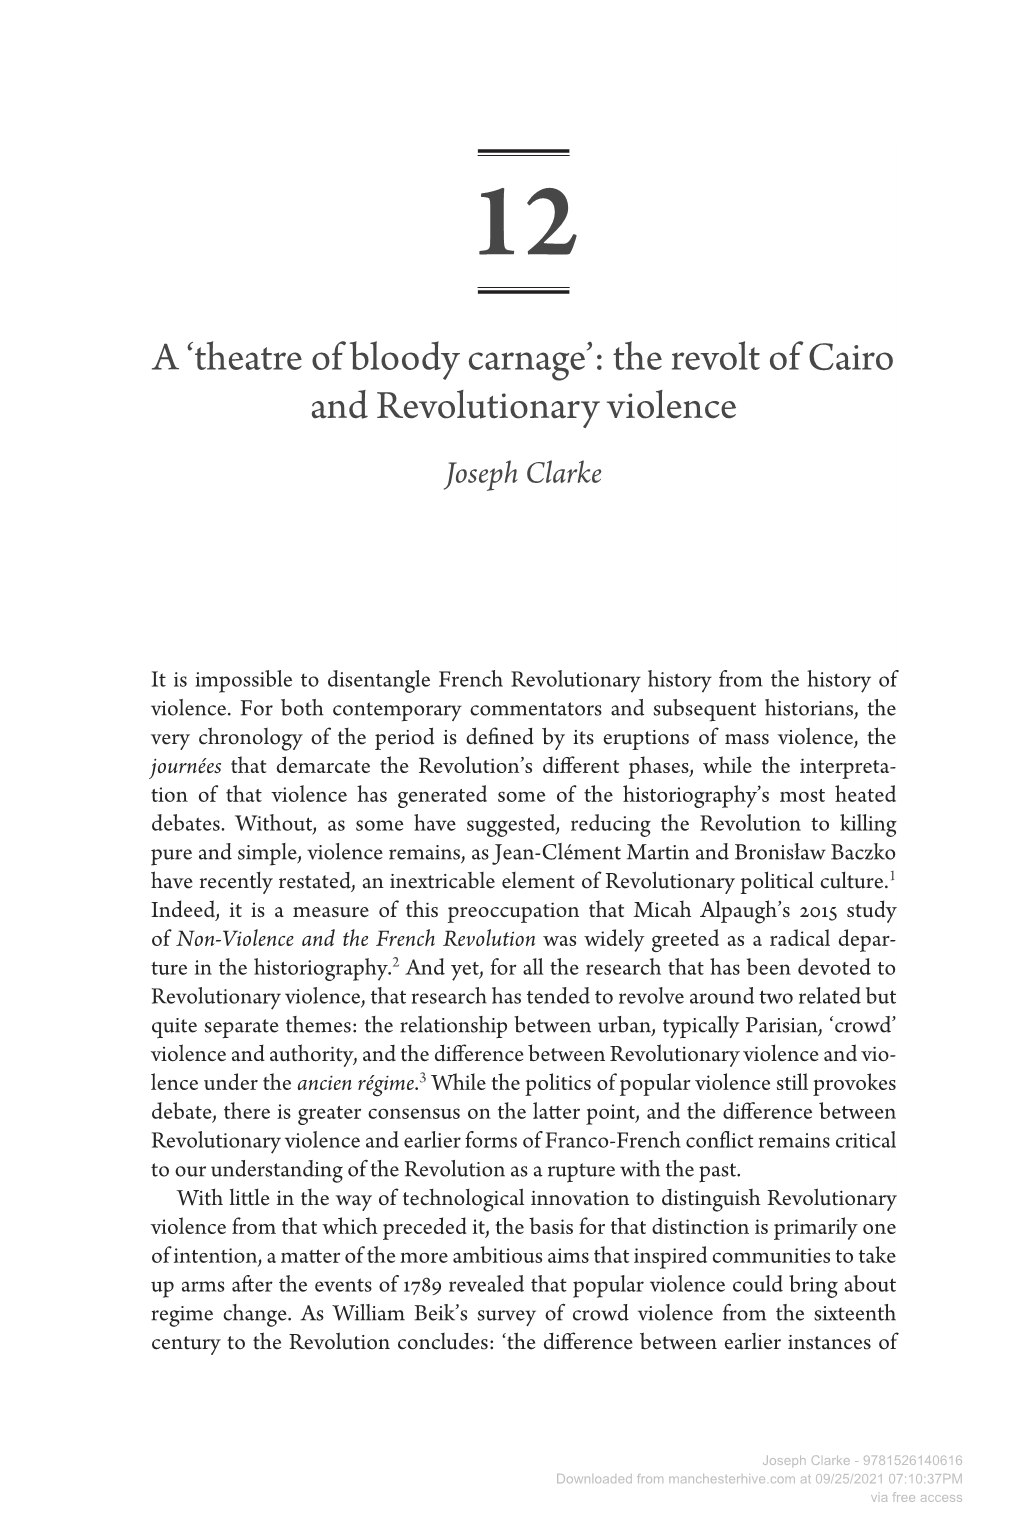 The Revolt of Cairo and Revolutionary Violence